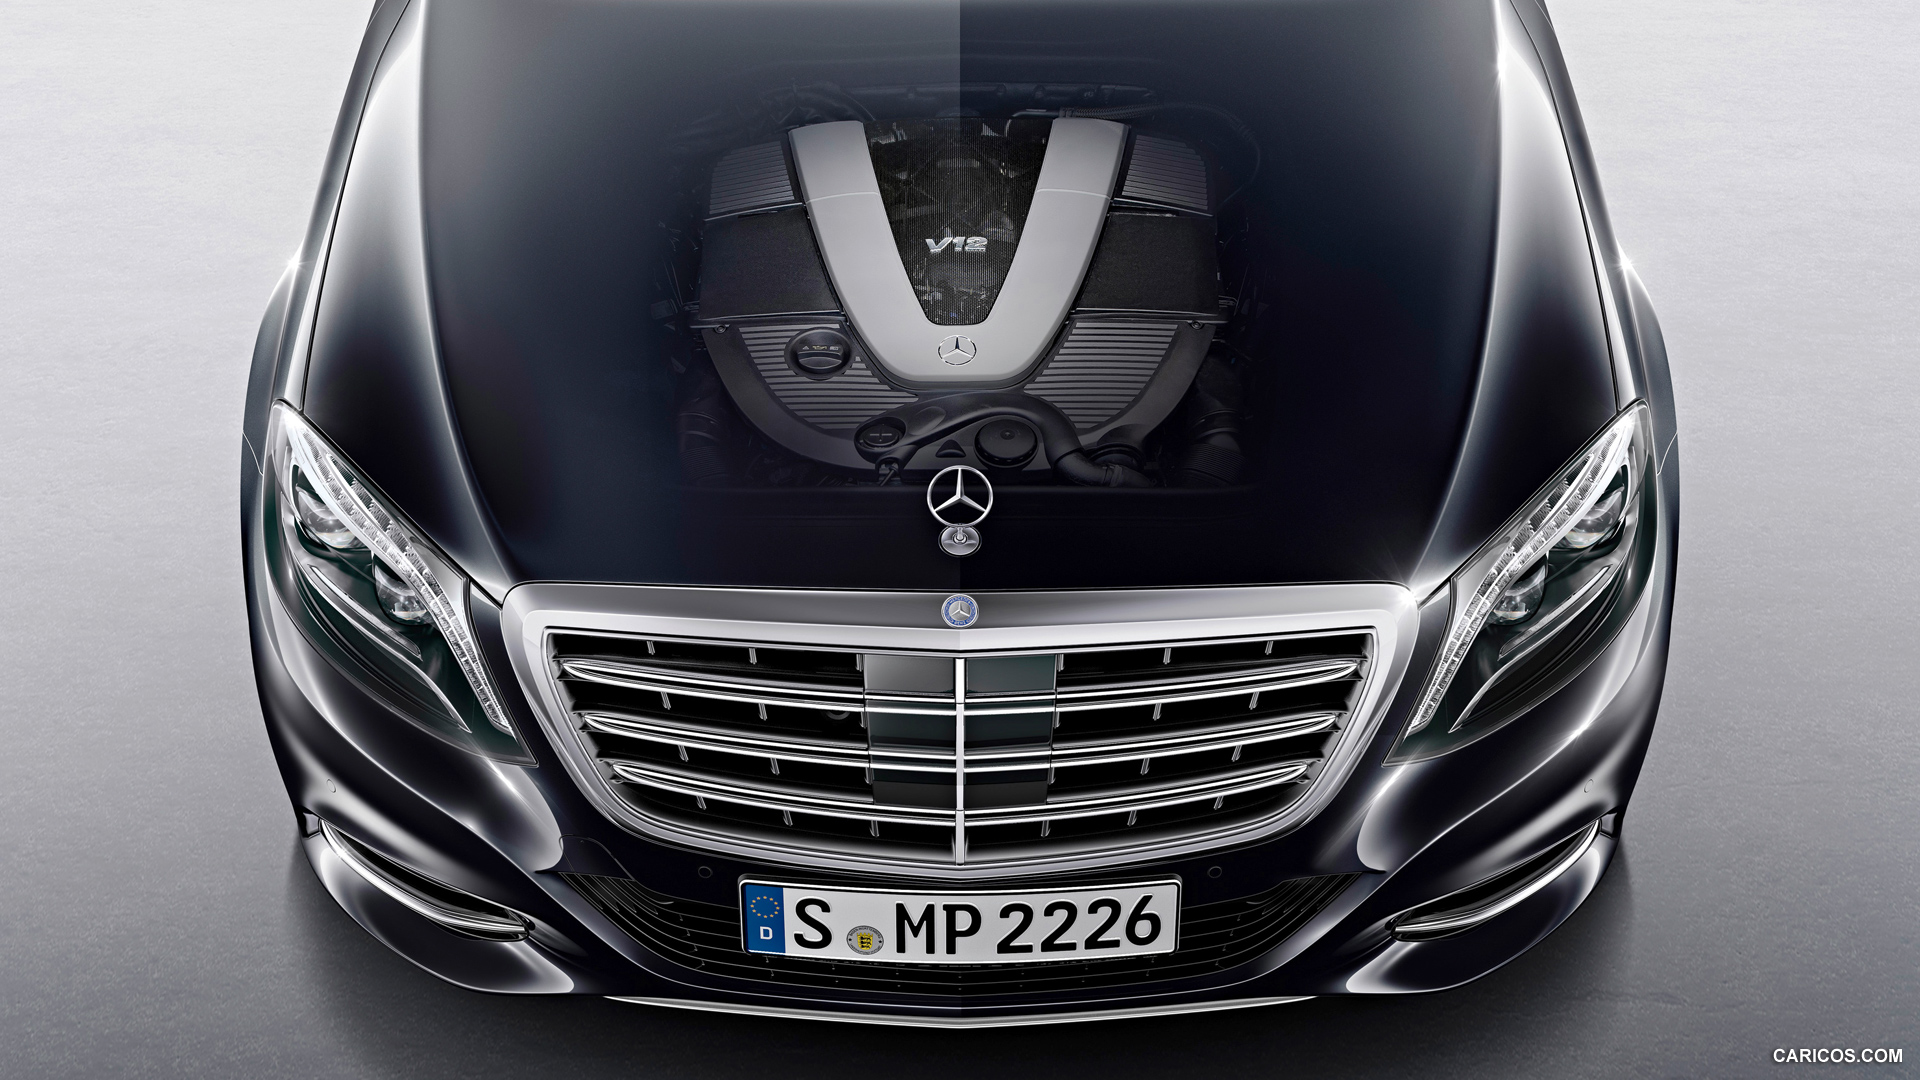 2015 Mercedes-Benz S600 Phantom-View - Engine, #6 of 10